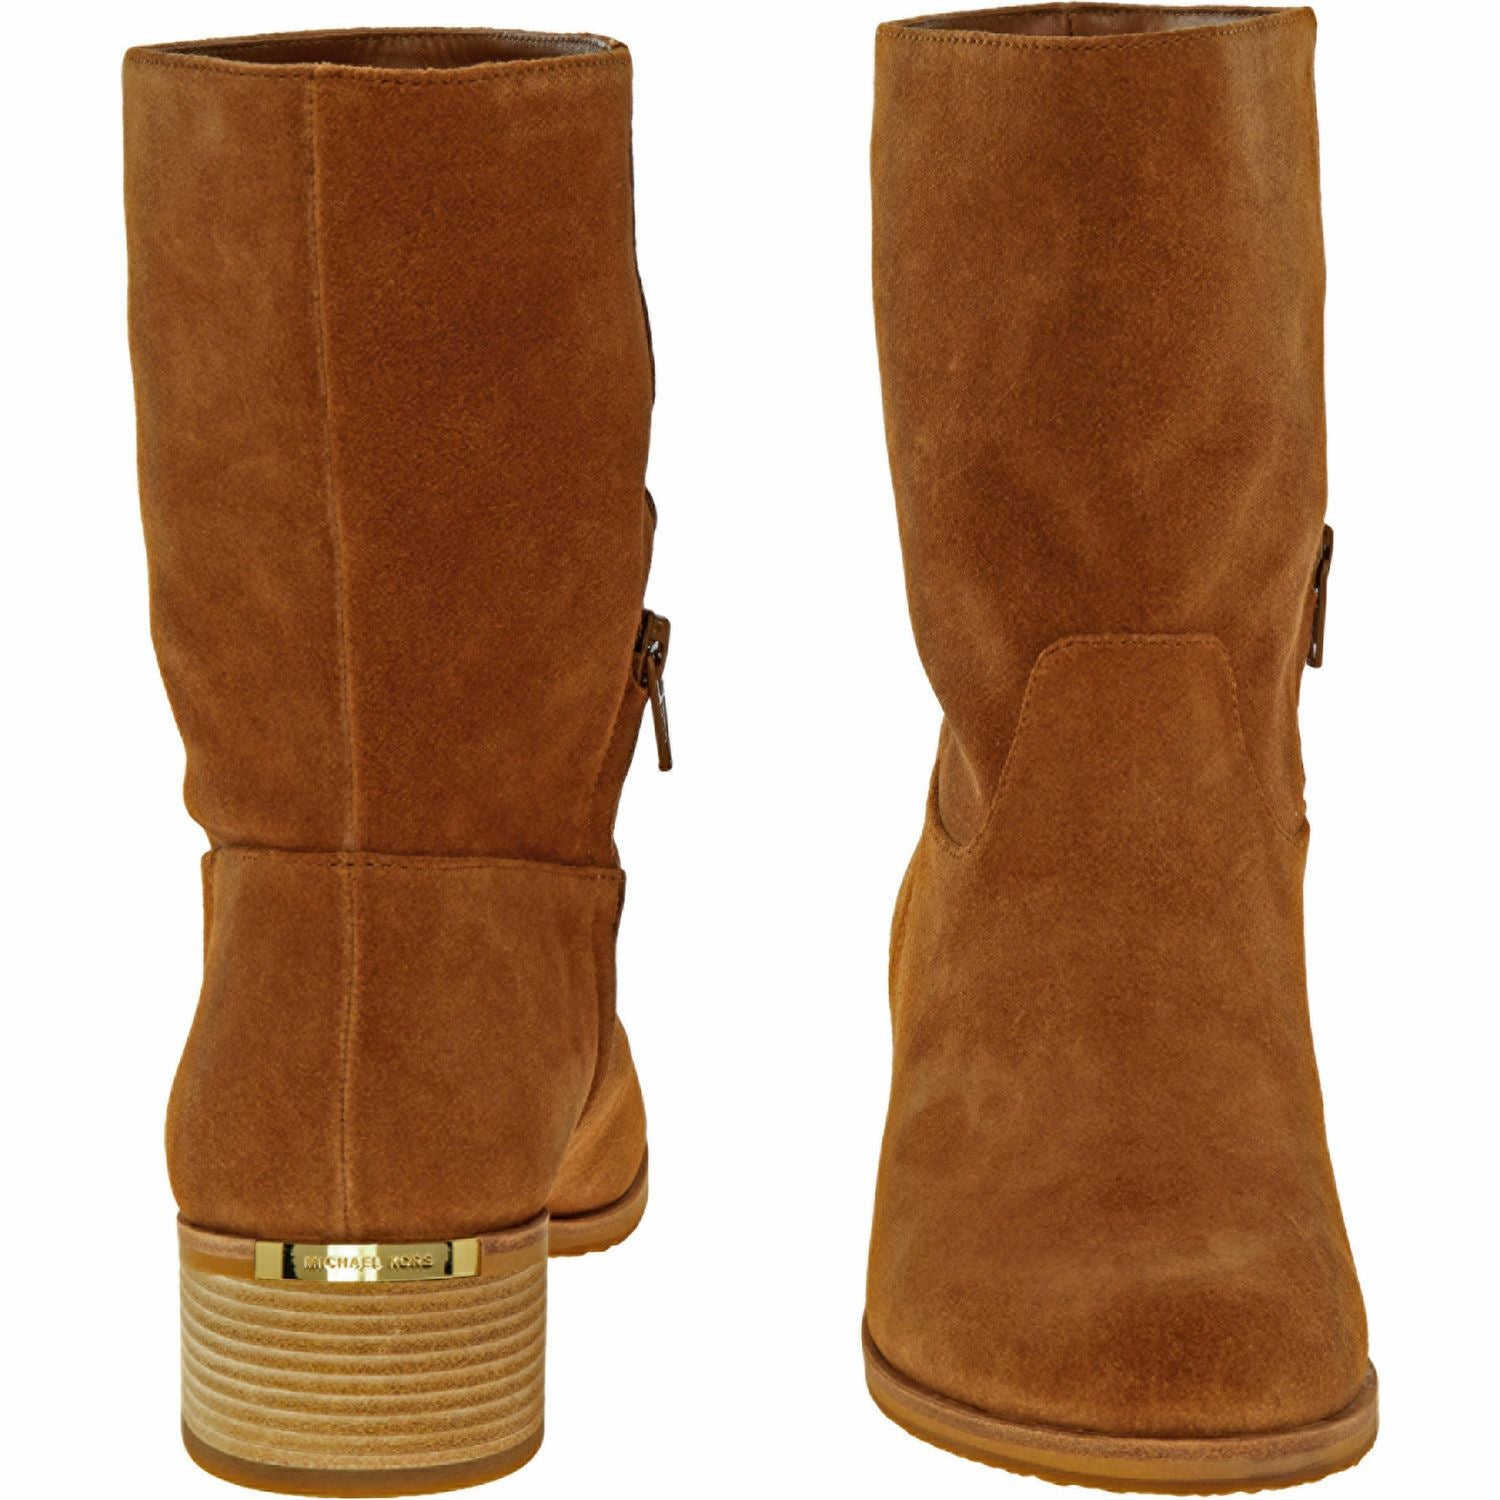 MICHAEL KORS Women's PIERCE Camel Brown Suede Ankle Boots, size UK 5.5